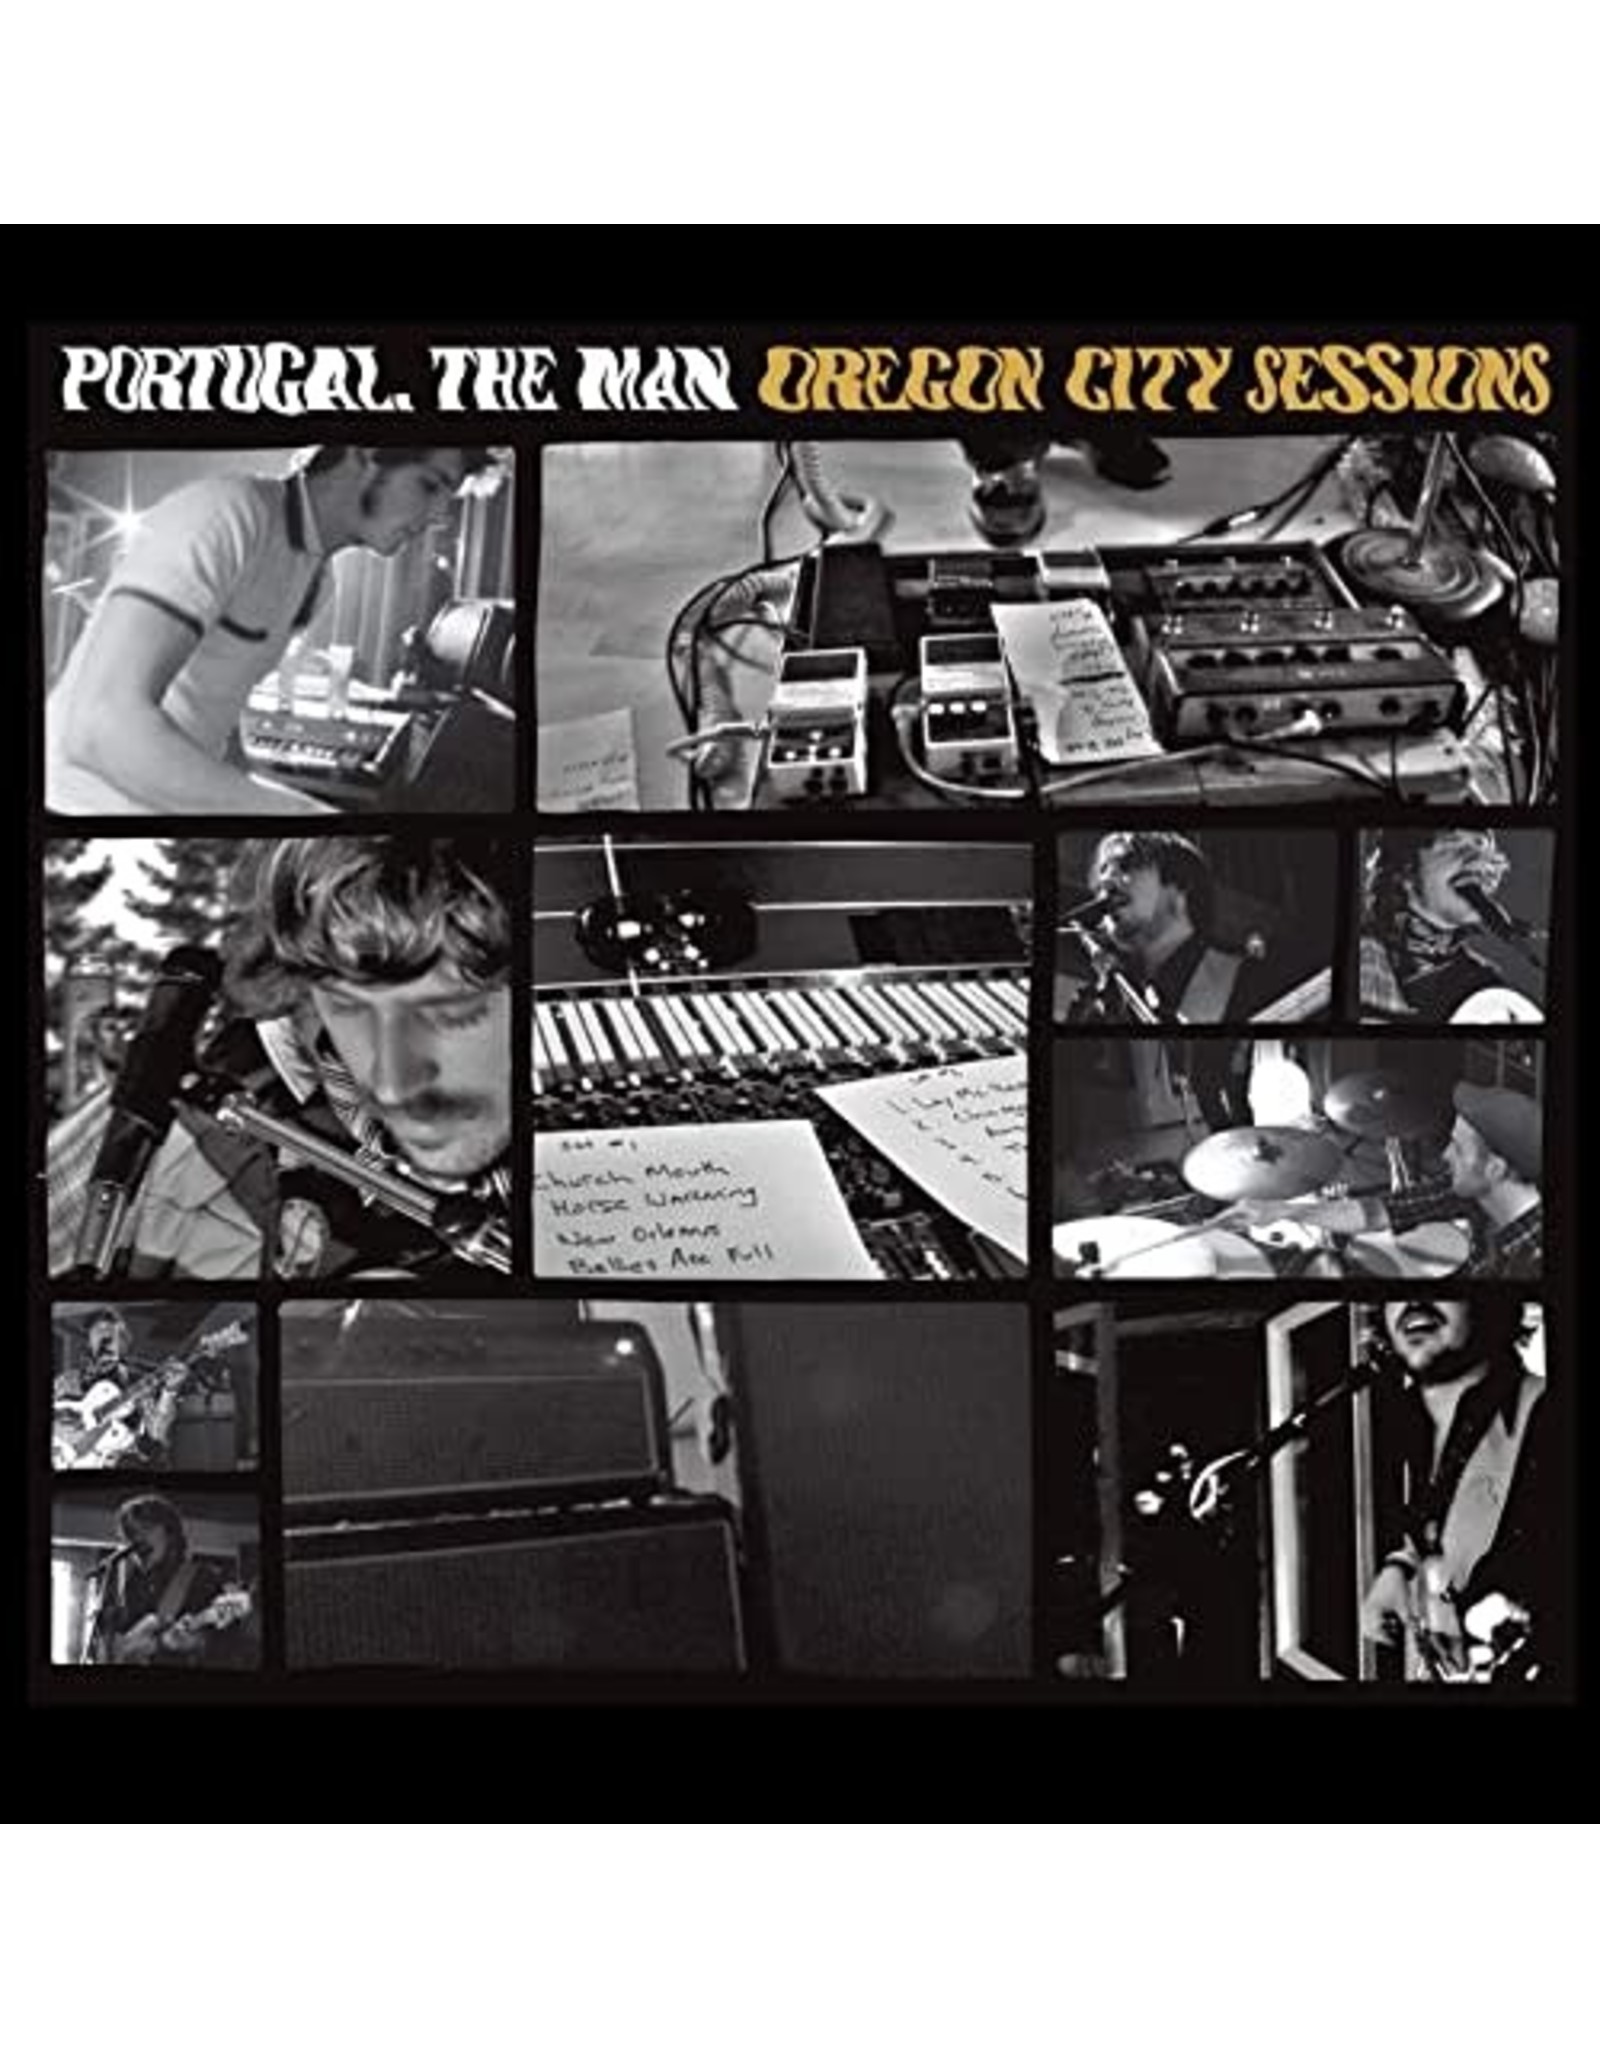 Portugal. The Man - Oregon City Sessions LP